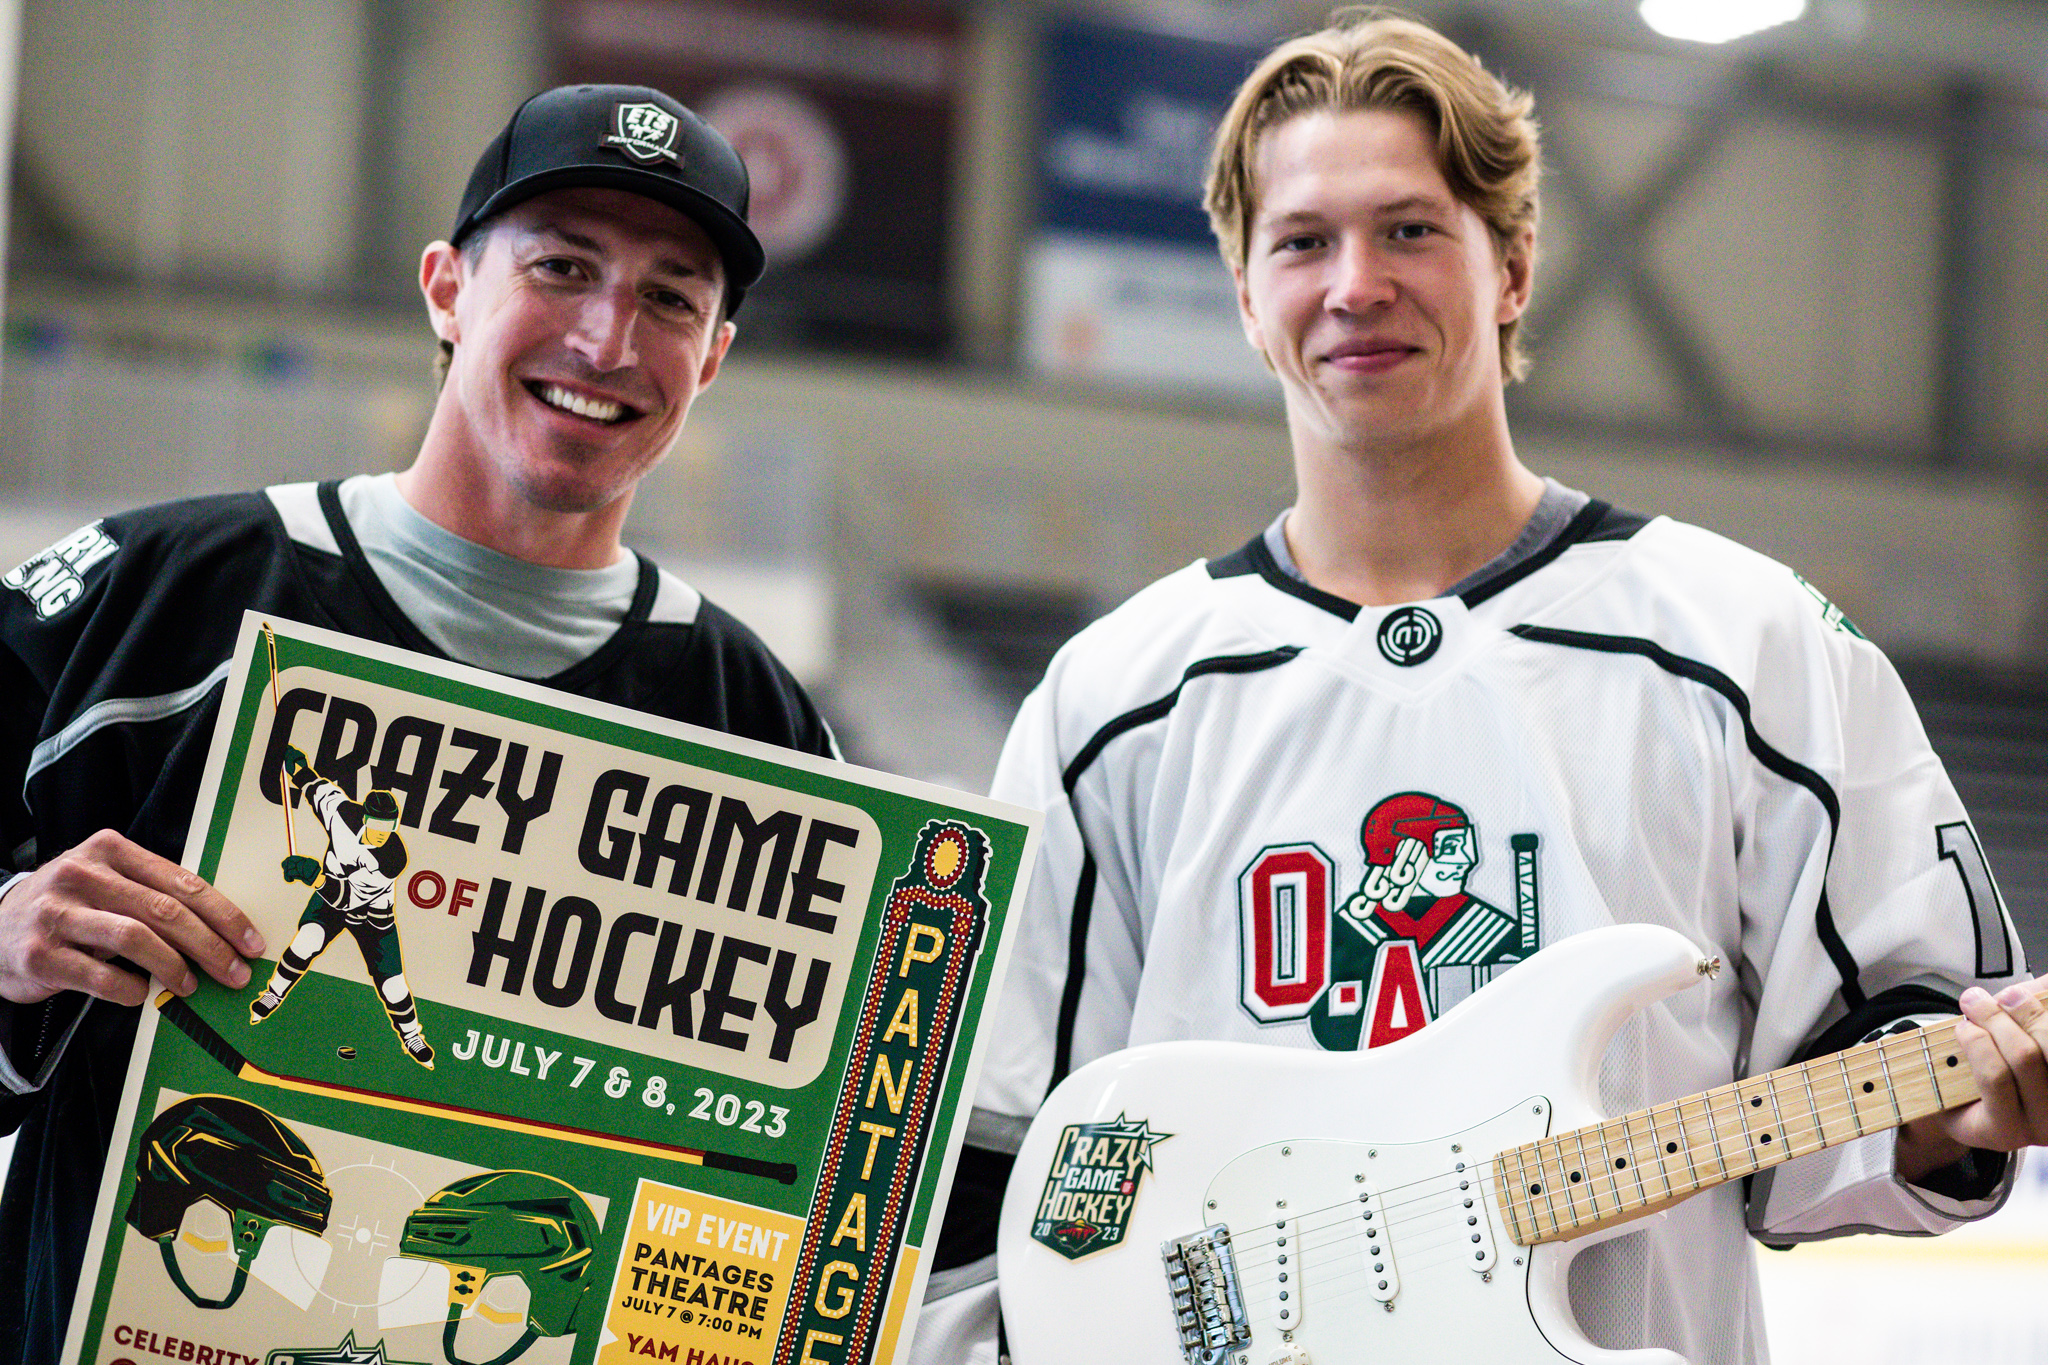 O.A.R., Wild collaborating for Crazy Game of Hockey - CBS Minnesota